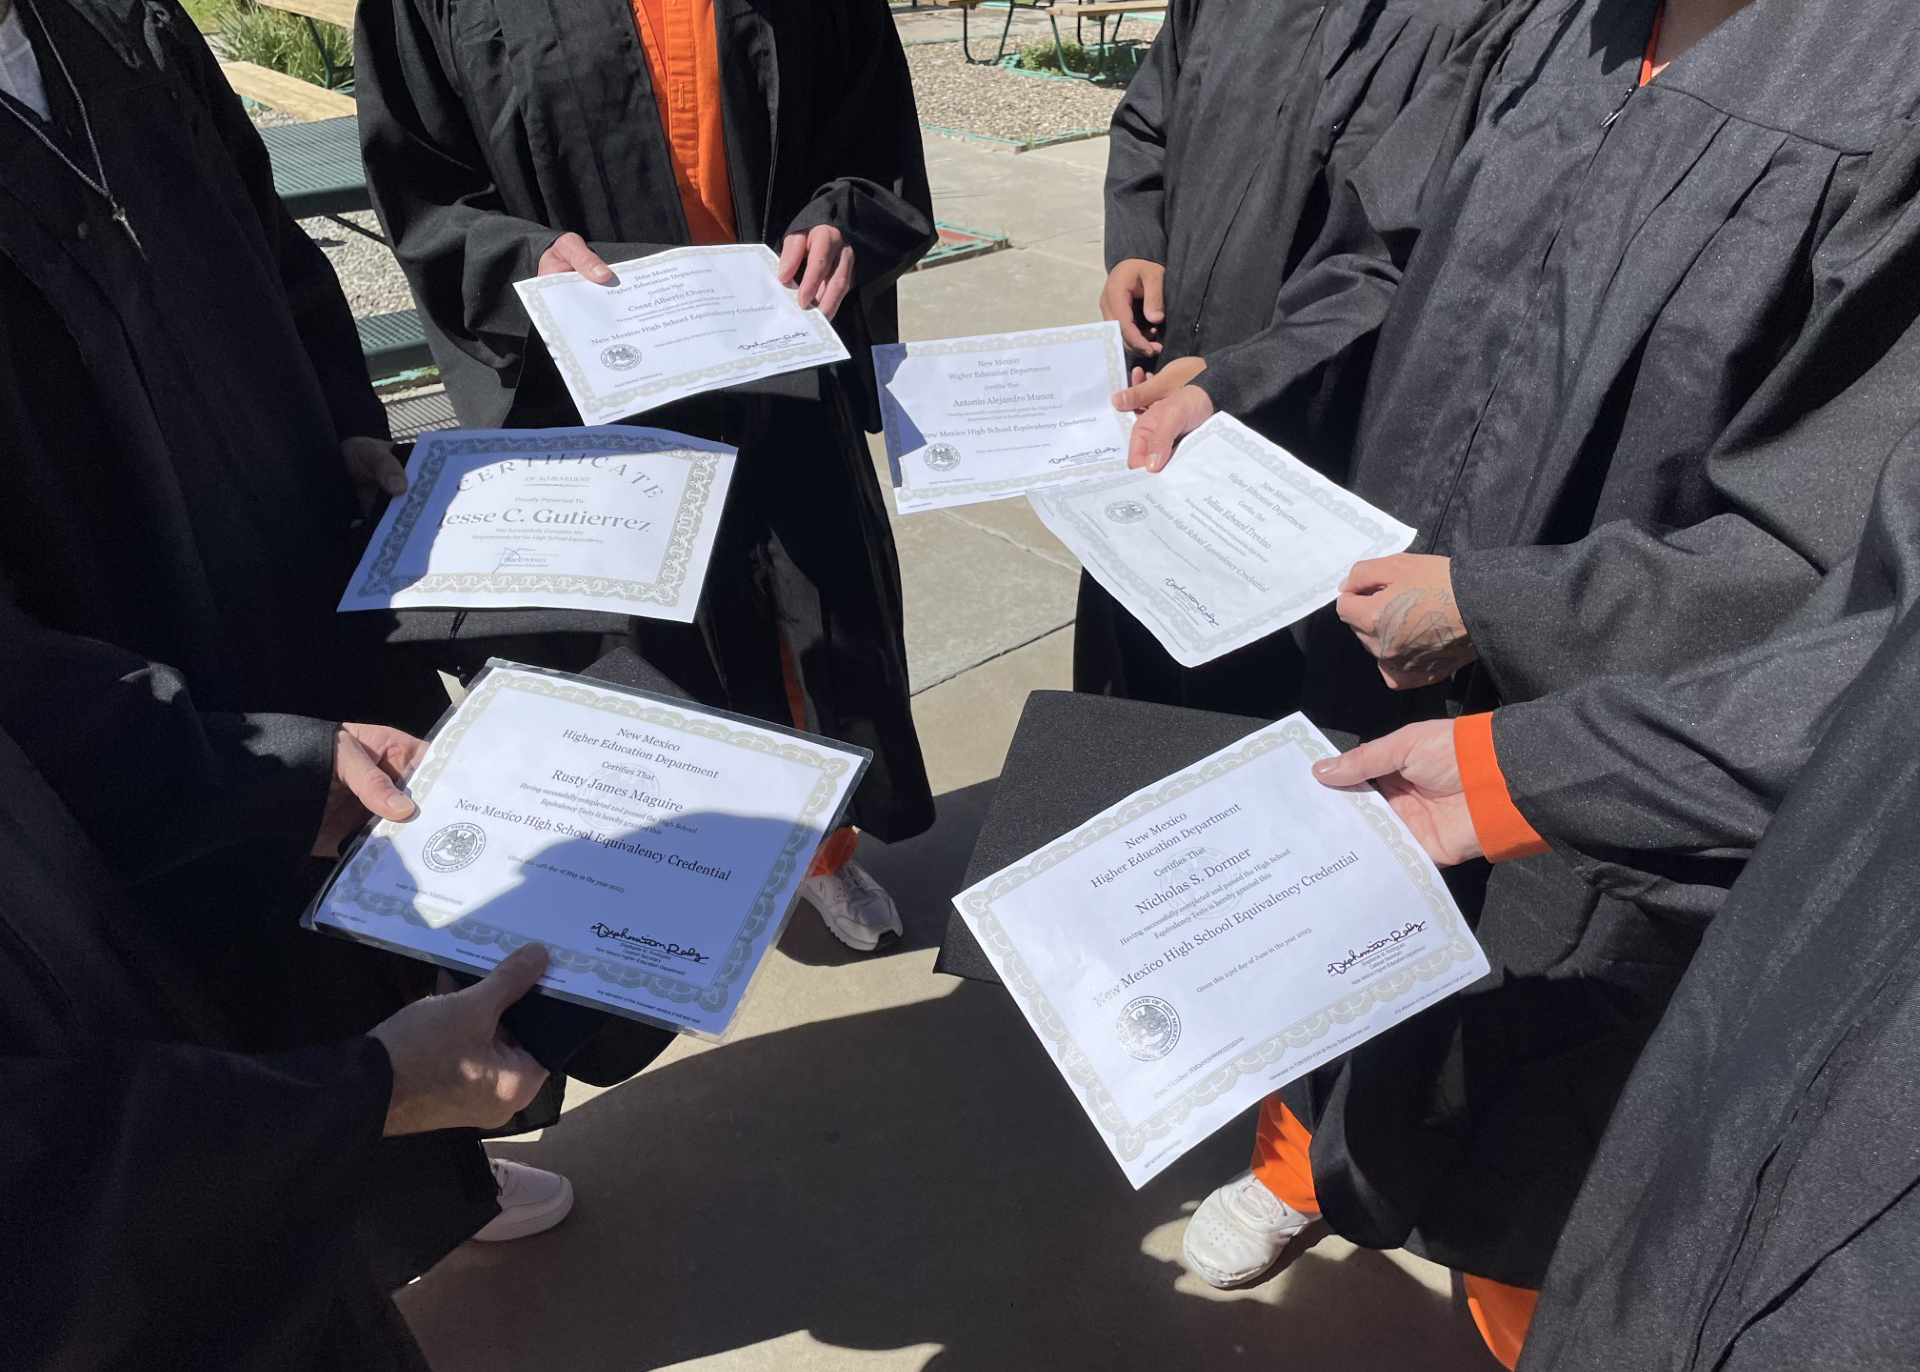 Inmates holding their diplomas